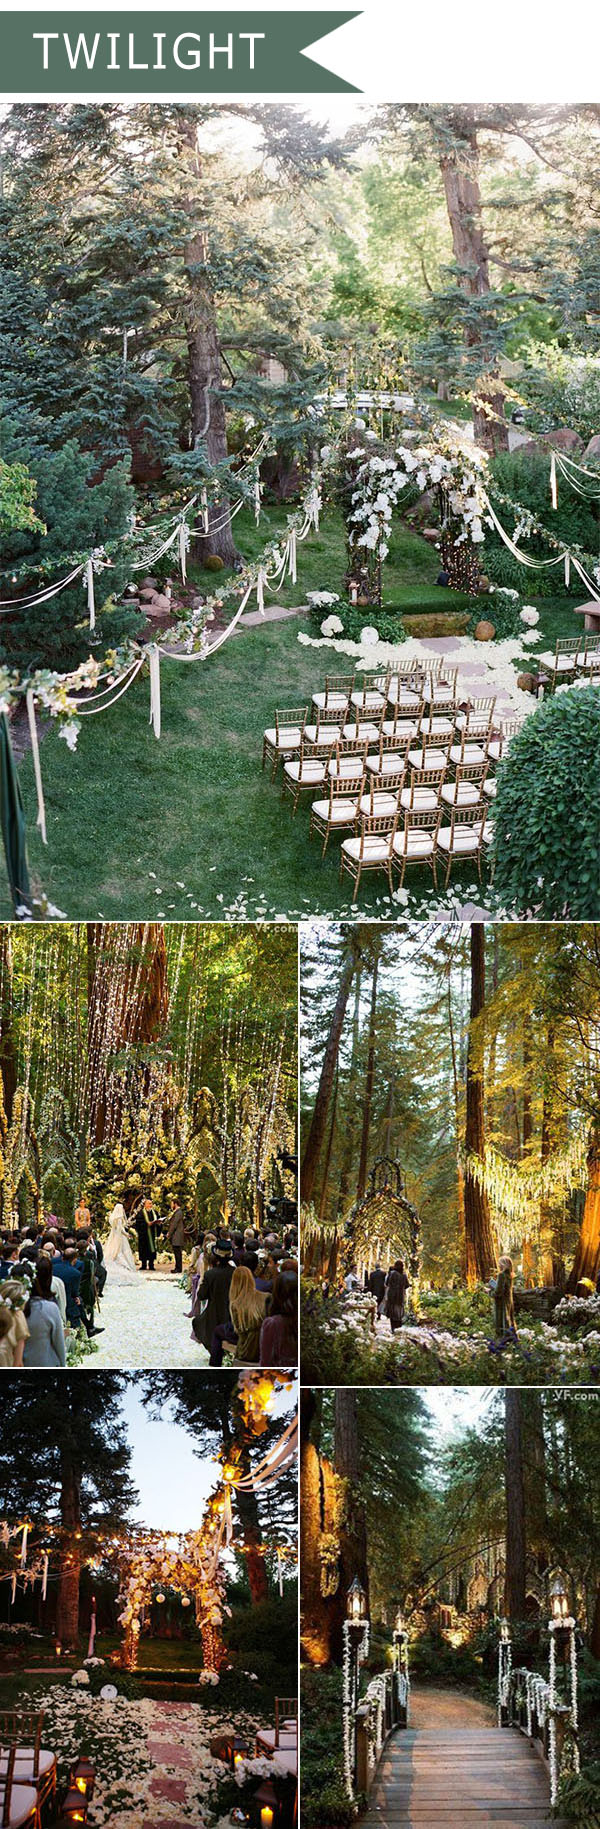 2016-trending-twilight-forest-themed-wedding-ideas